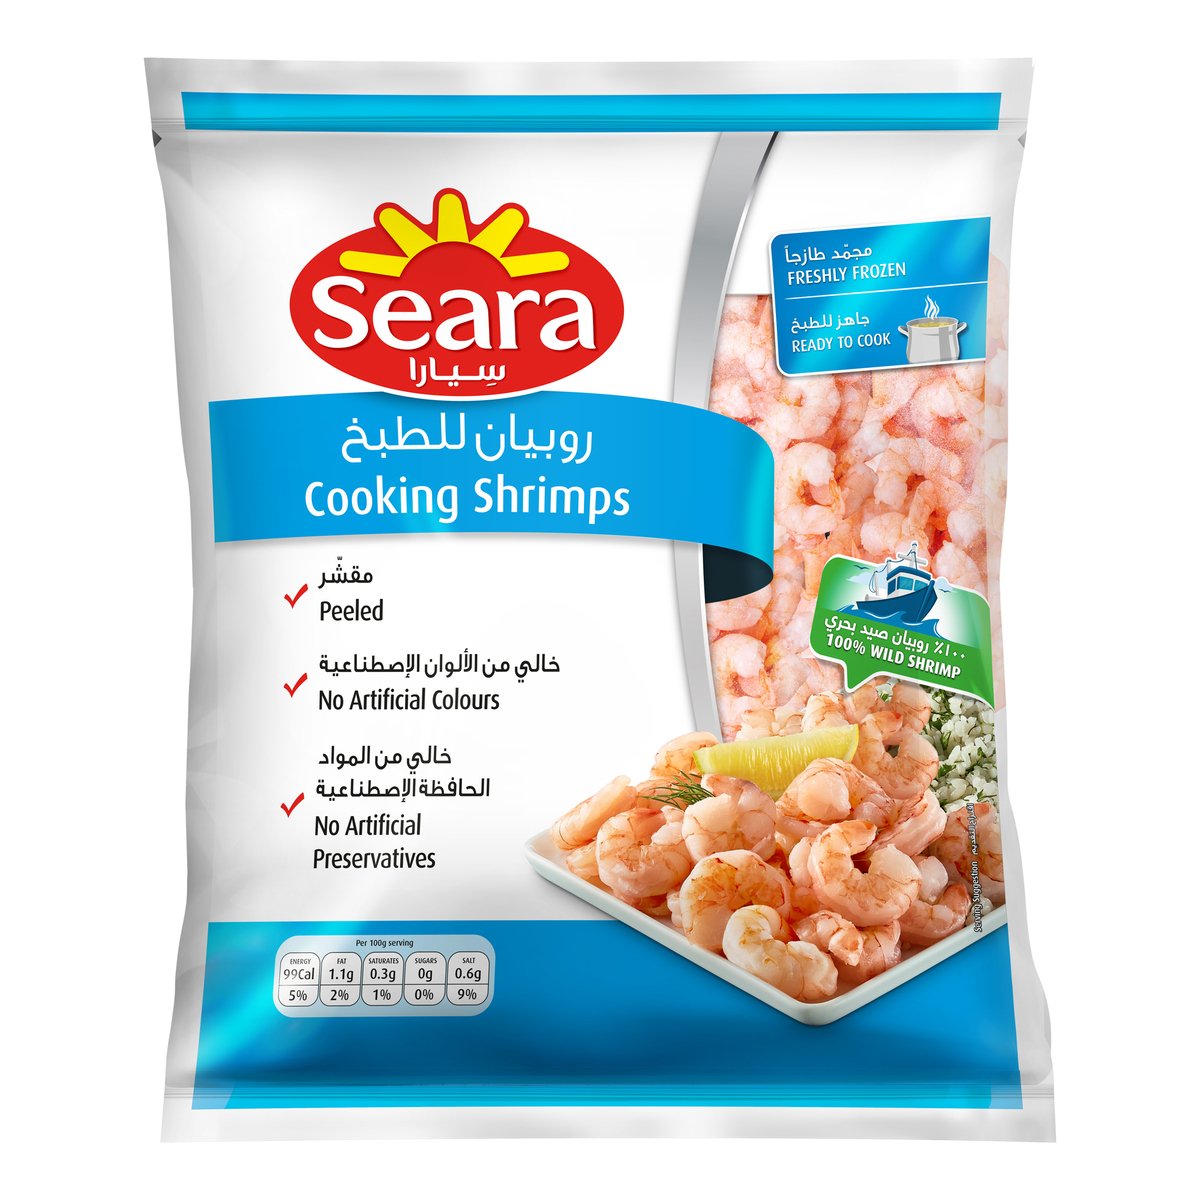 Seara Cooking Shrimps 750g